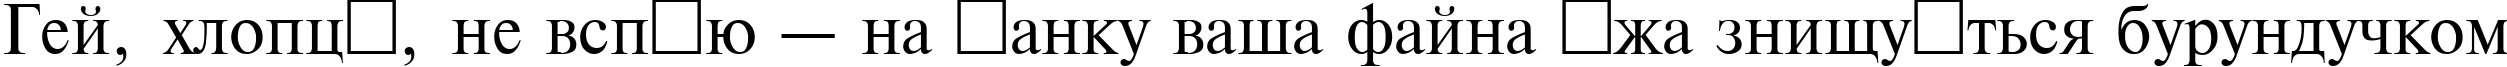 Пример написания шрифтом TimesET95N текста на украинском